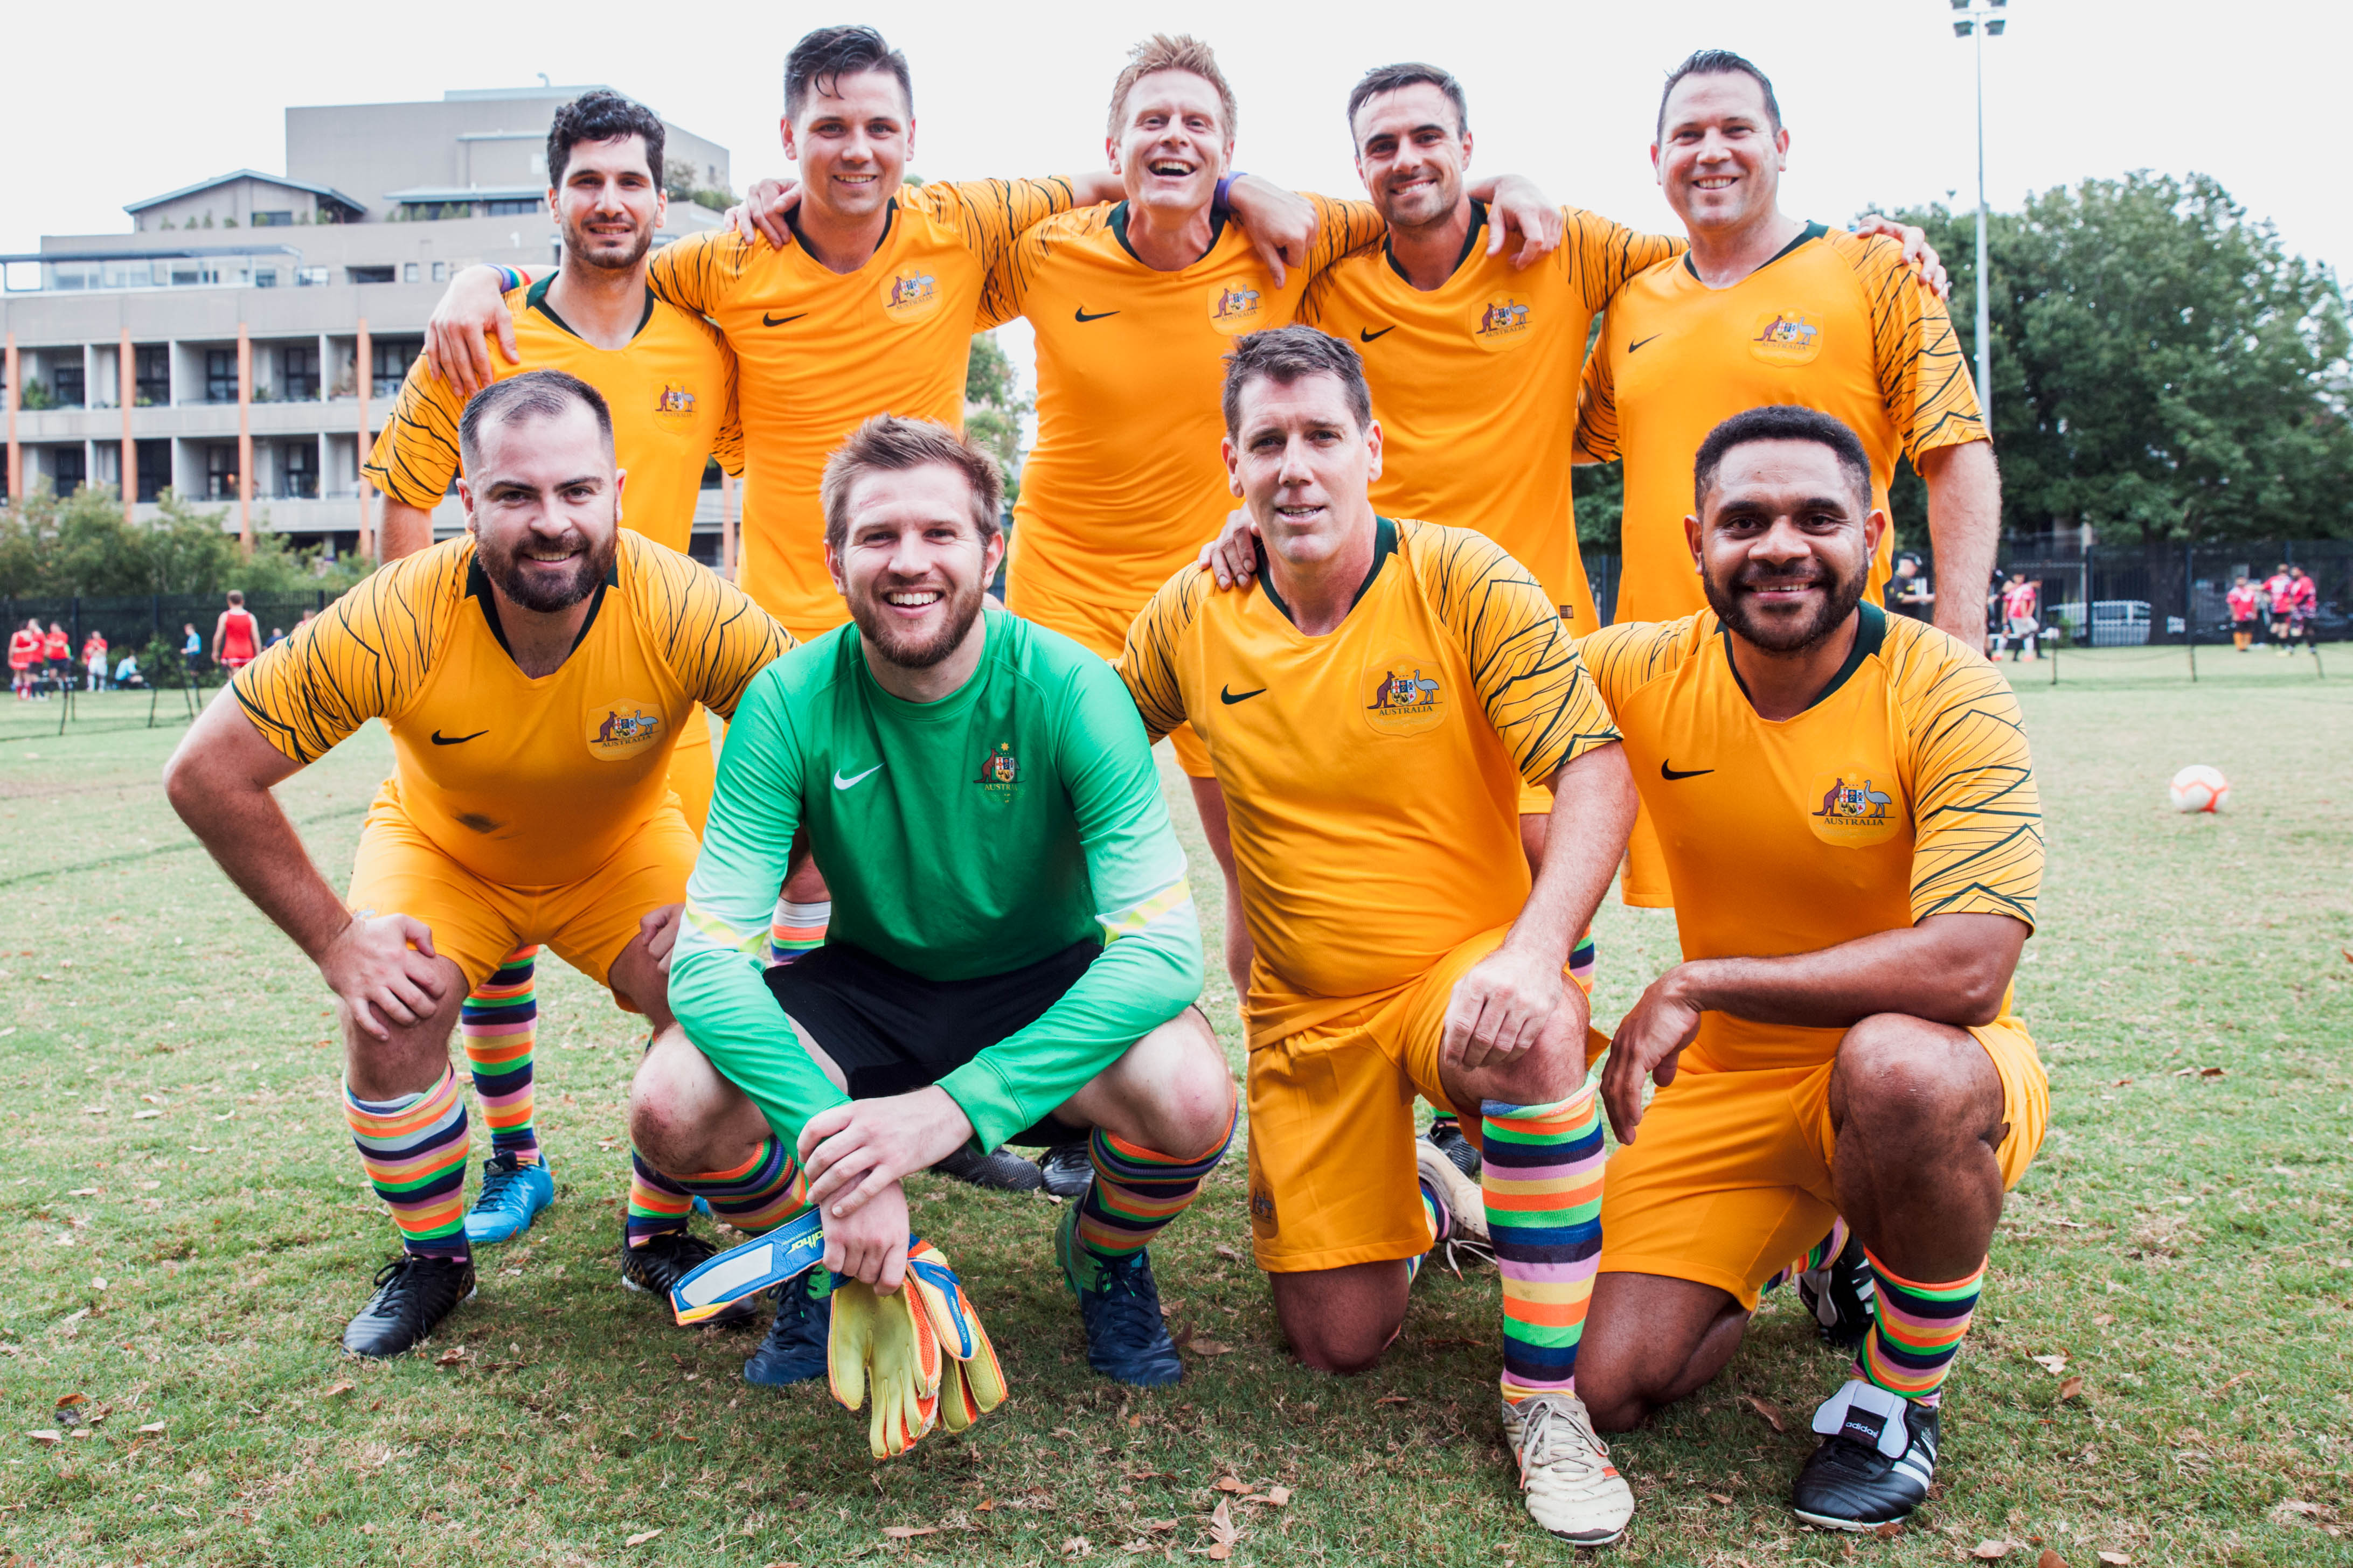 Football Australia/APL Men's Team